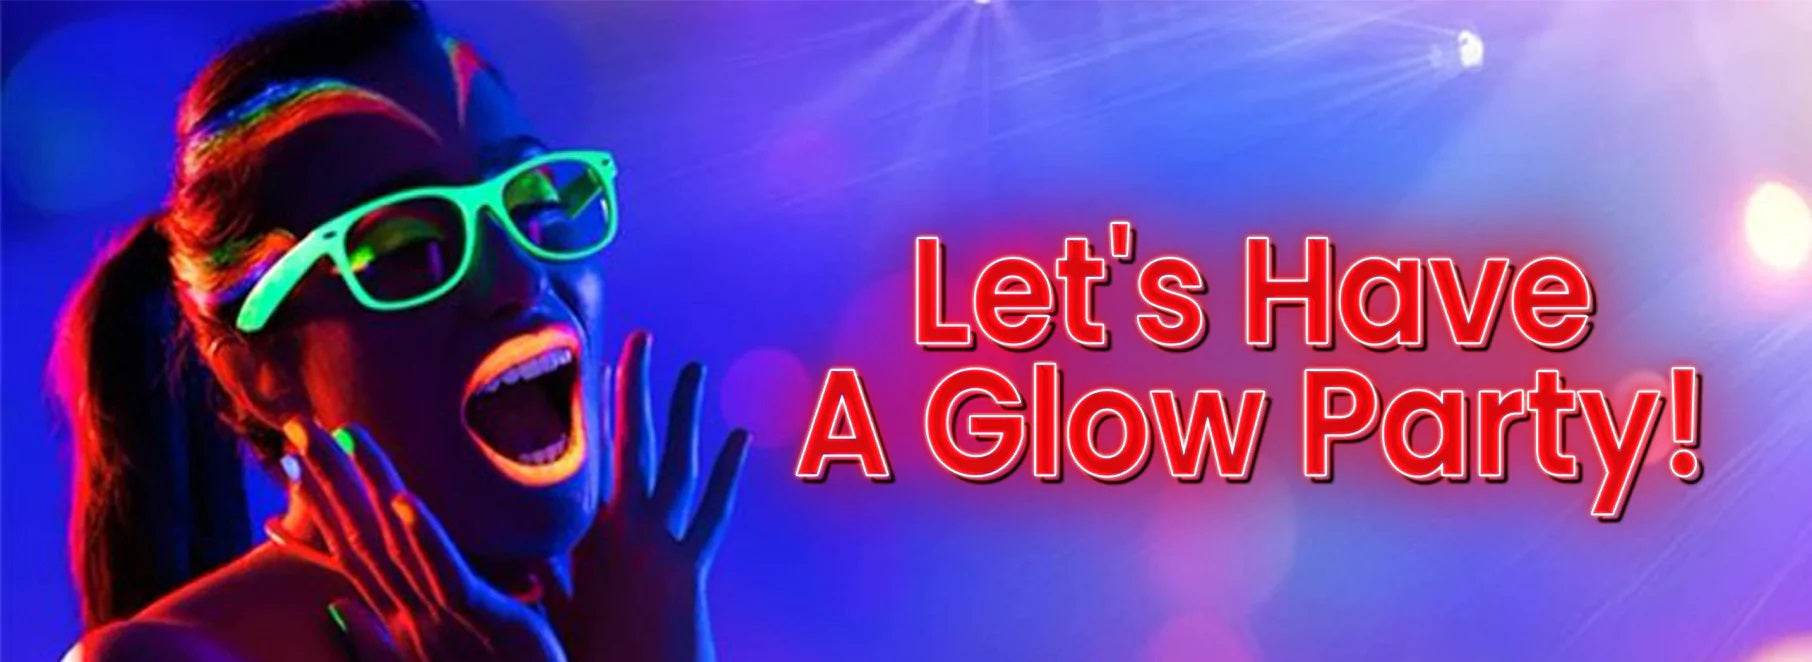 Glow Party - Most Amazing Ideas & Prerequisites!